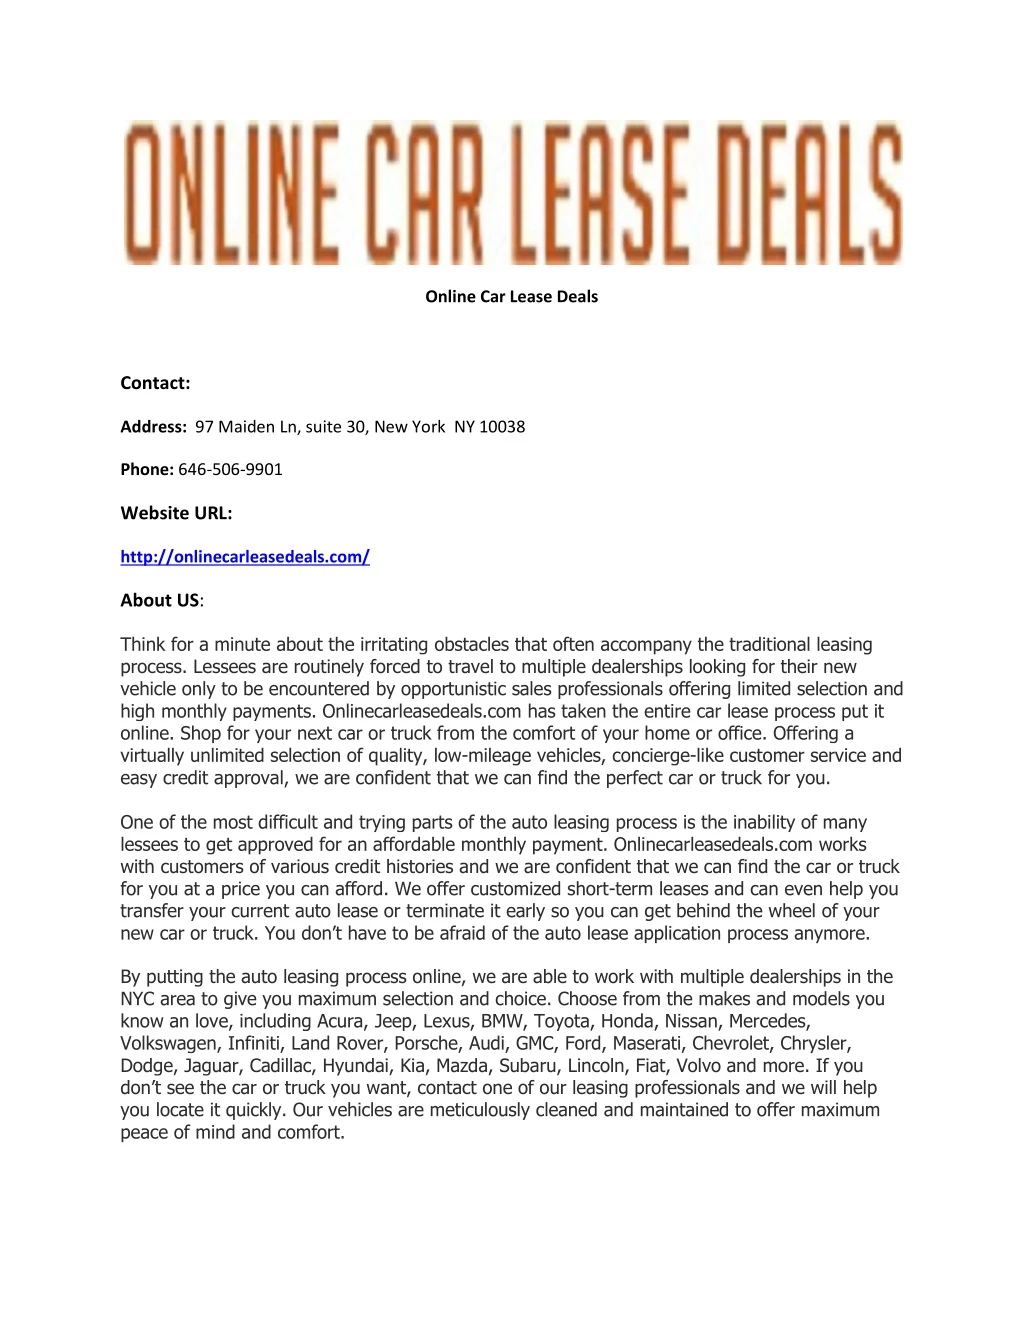 online car lease deals n.